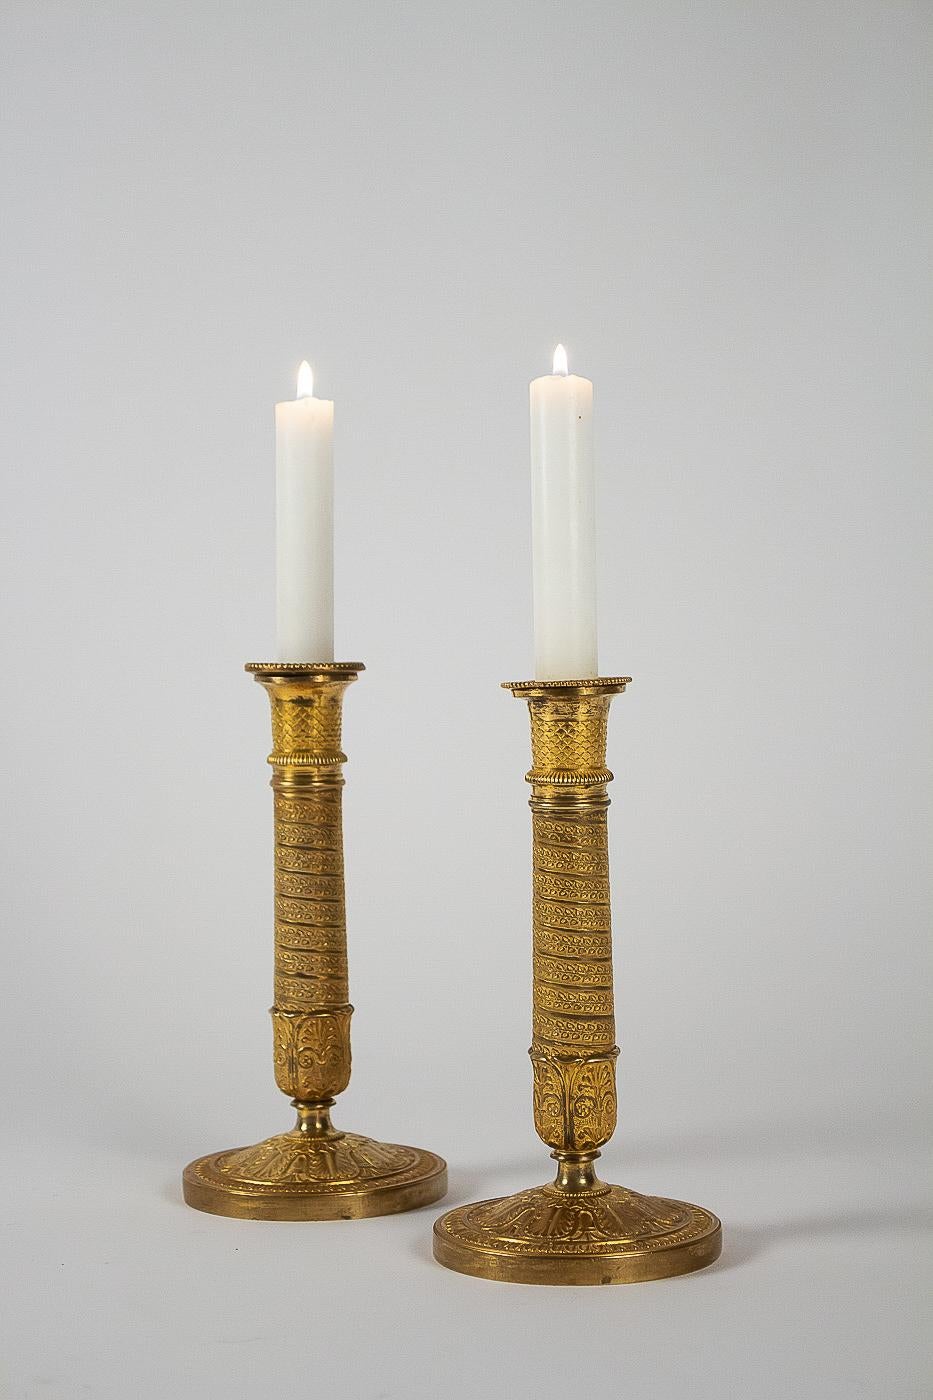 French Empire Period, Pair of Small Chiseled Gilt-Bronze Candlesticks Circa 1805 (Französisch)